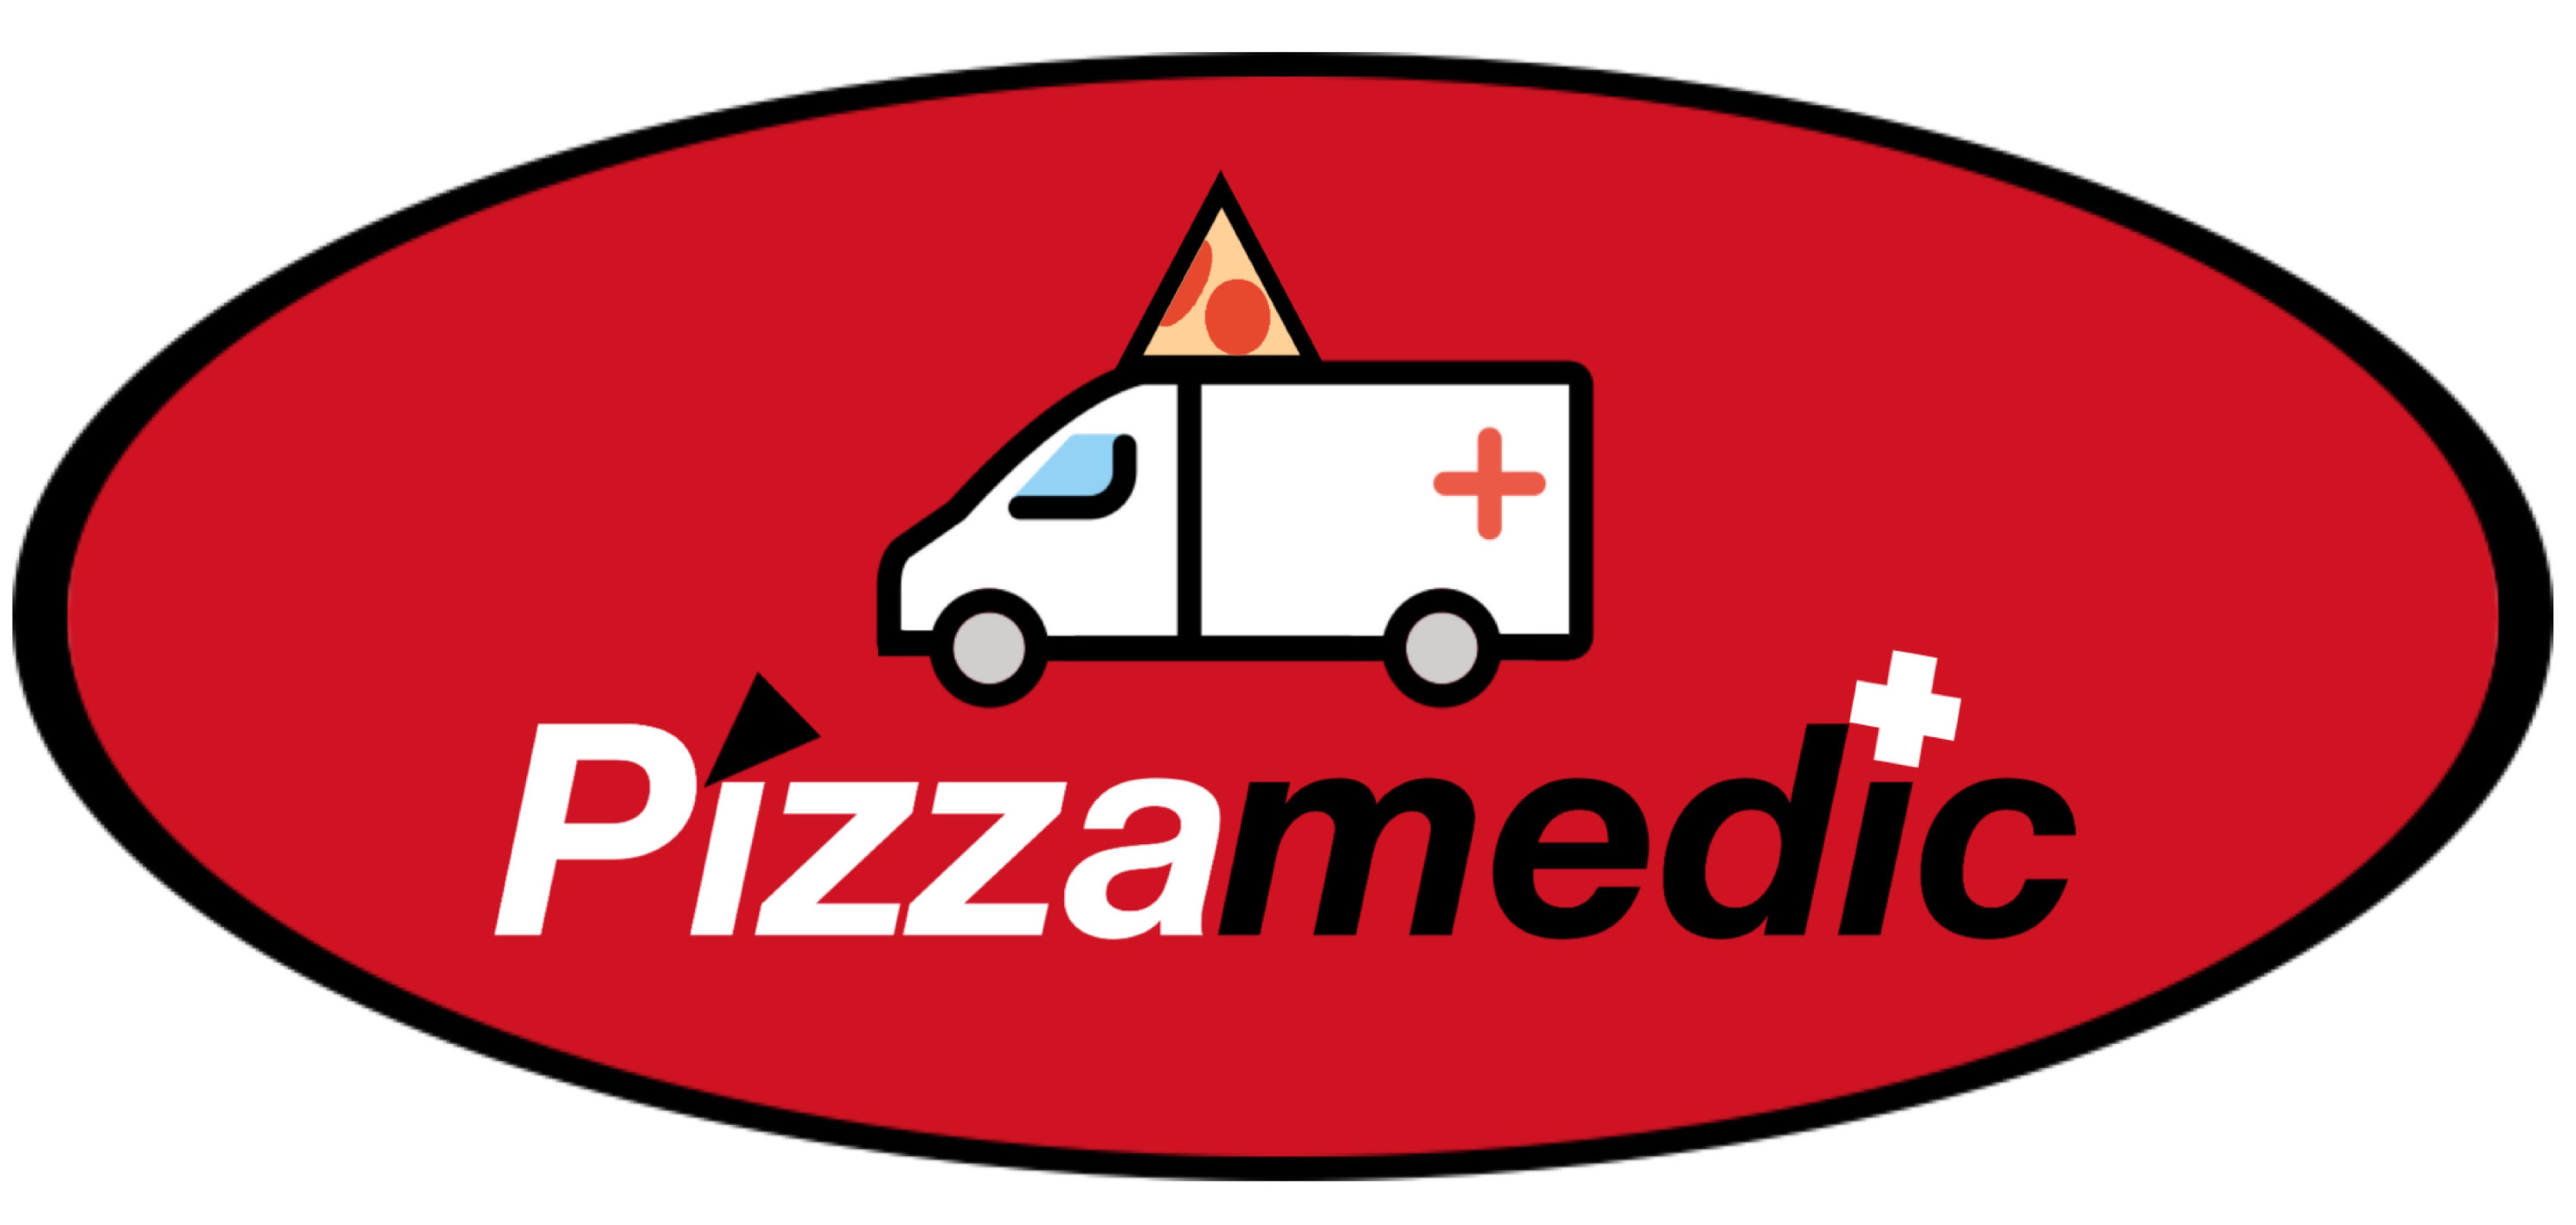 Pizzamedic